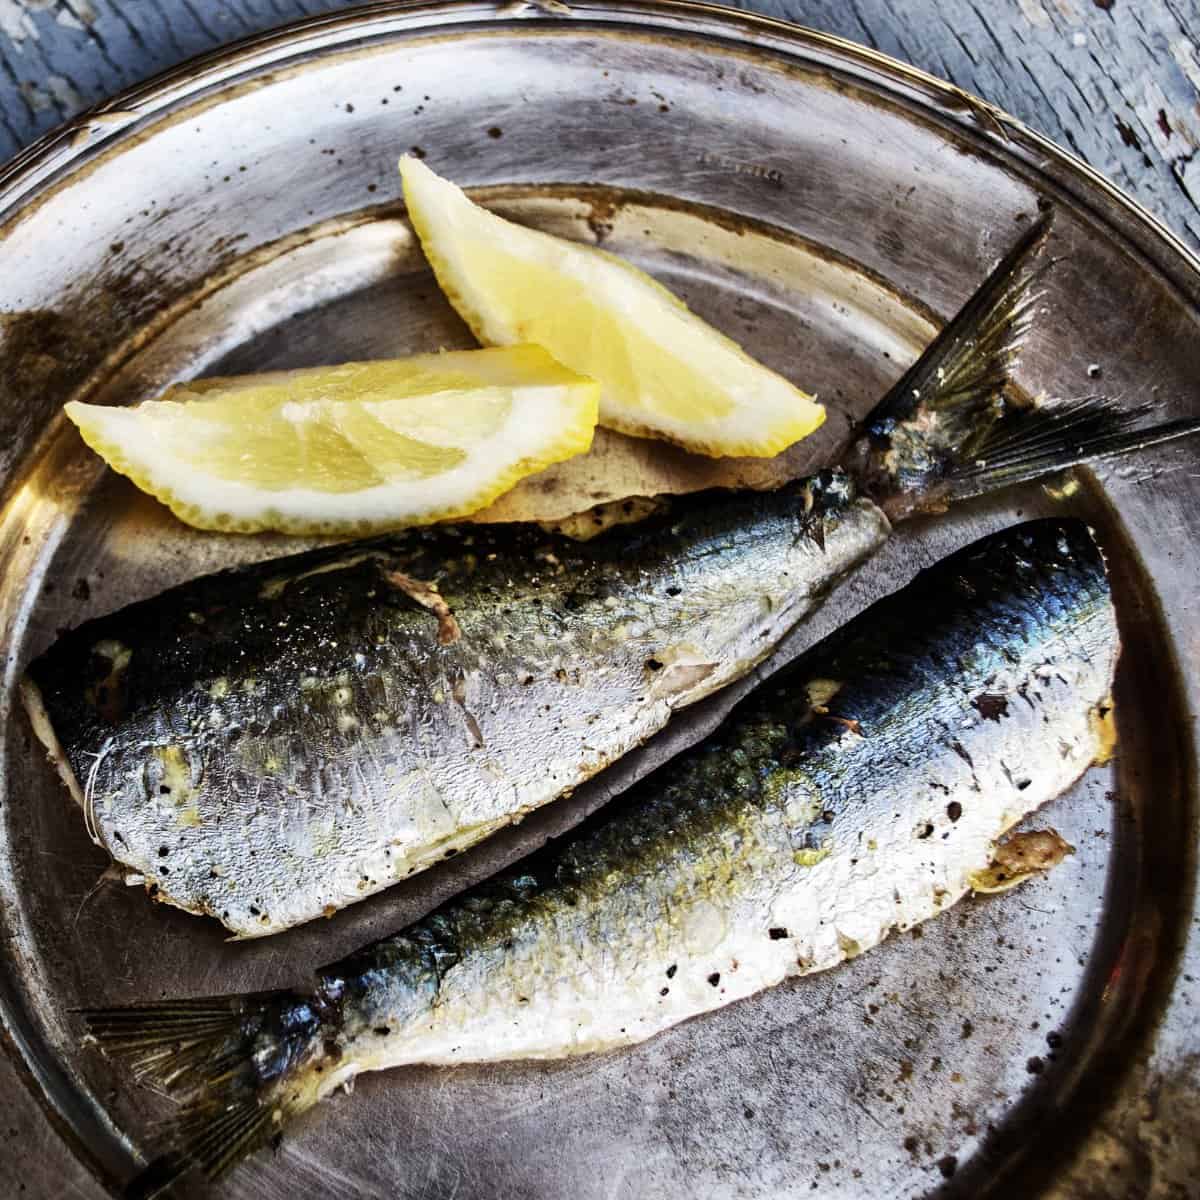 What are sardines